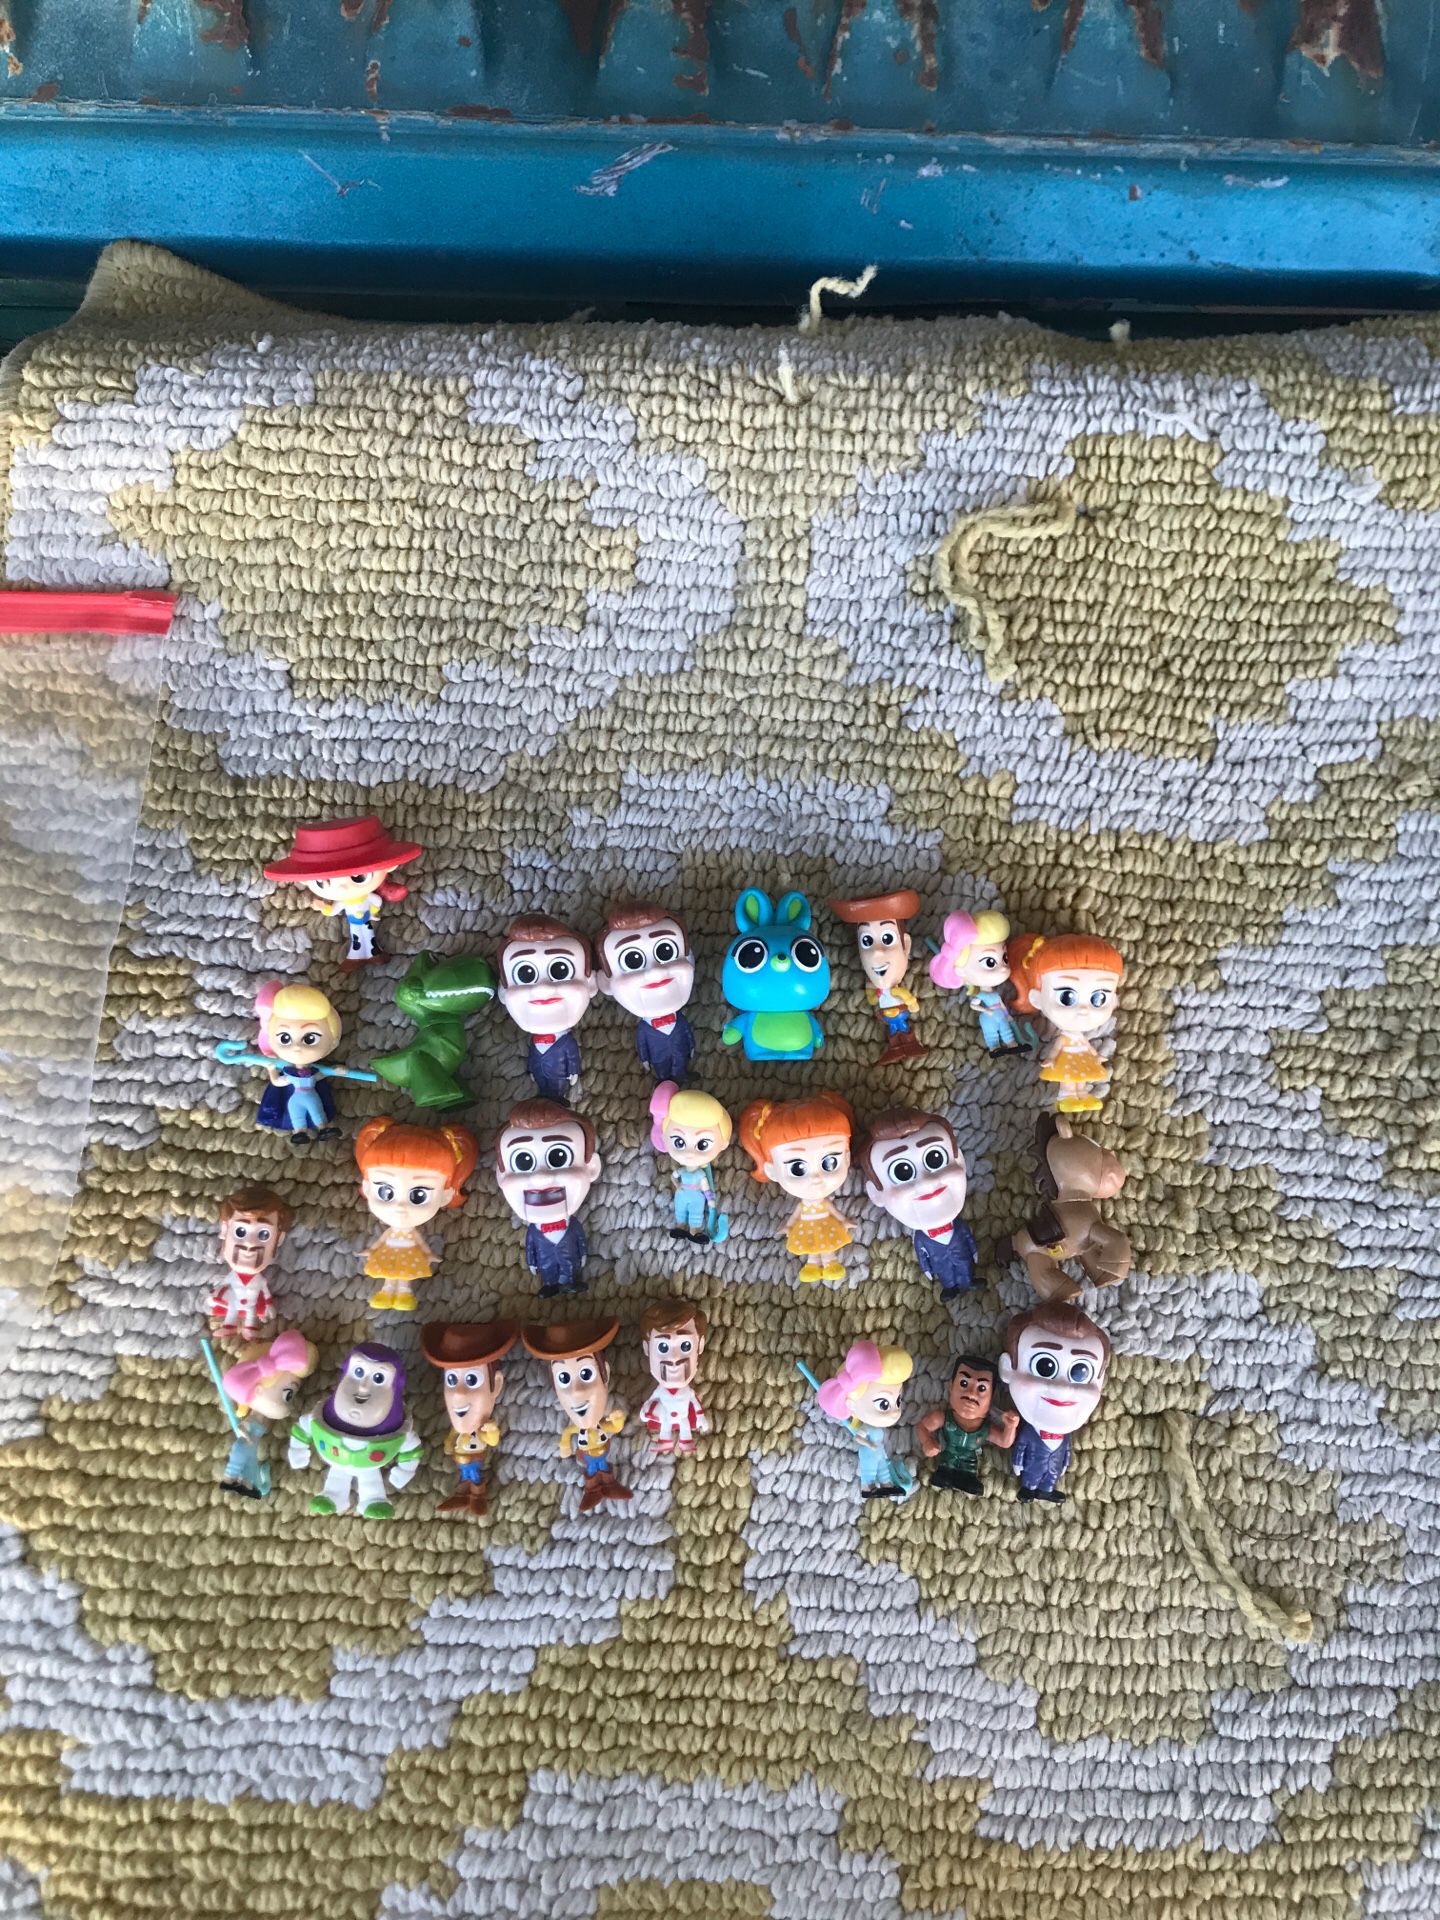 Toy story mini figures